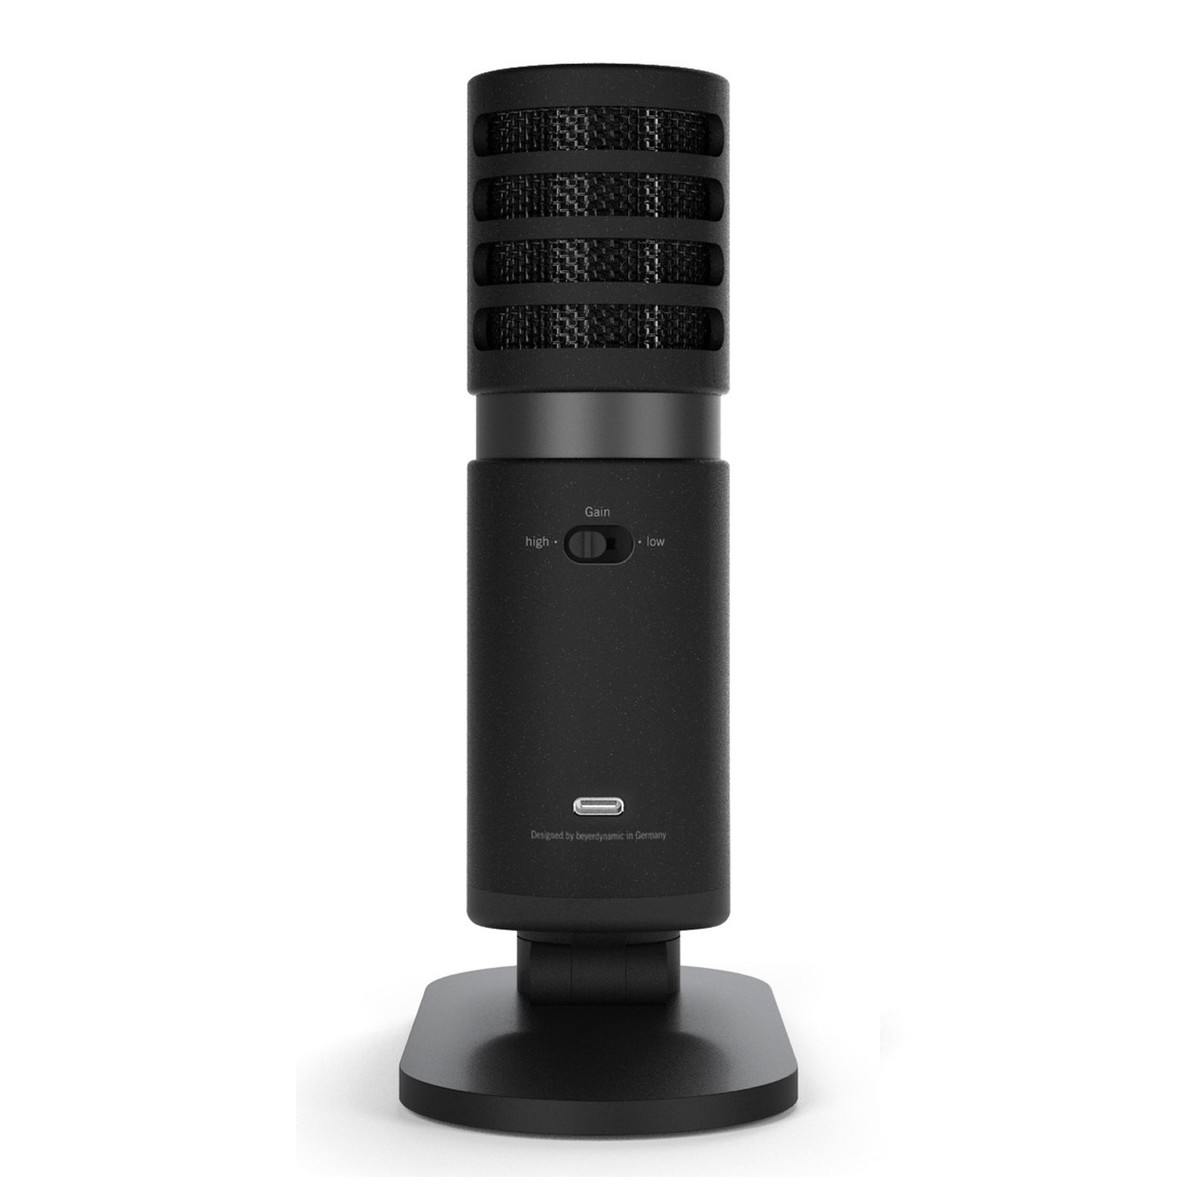 Beyerdynamic FOX Professional USB Condenser Microphone - DY Pro Audio